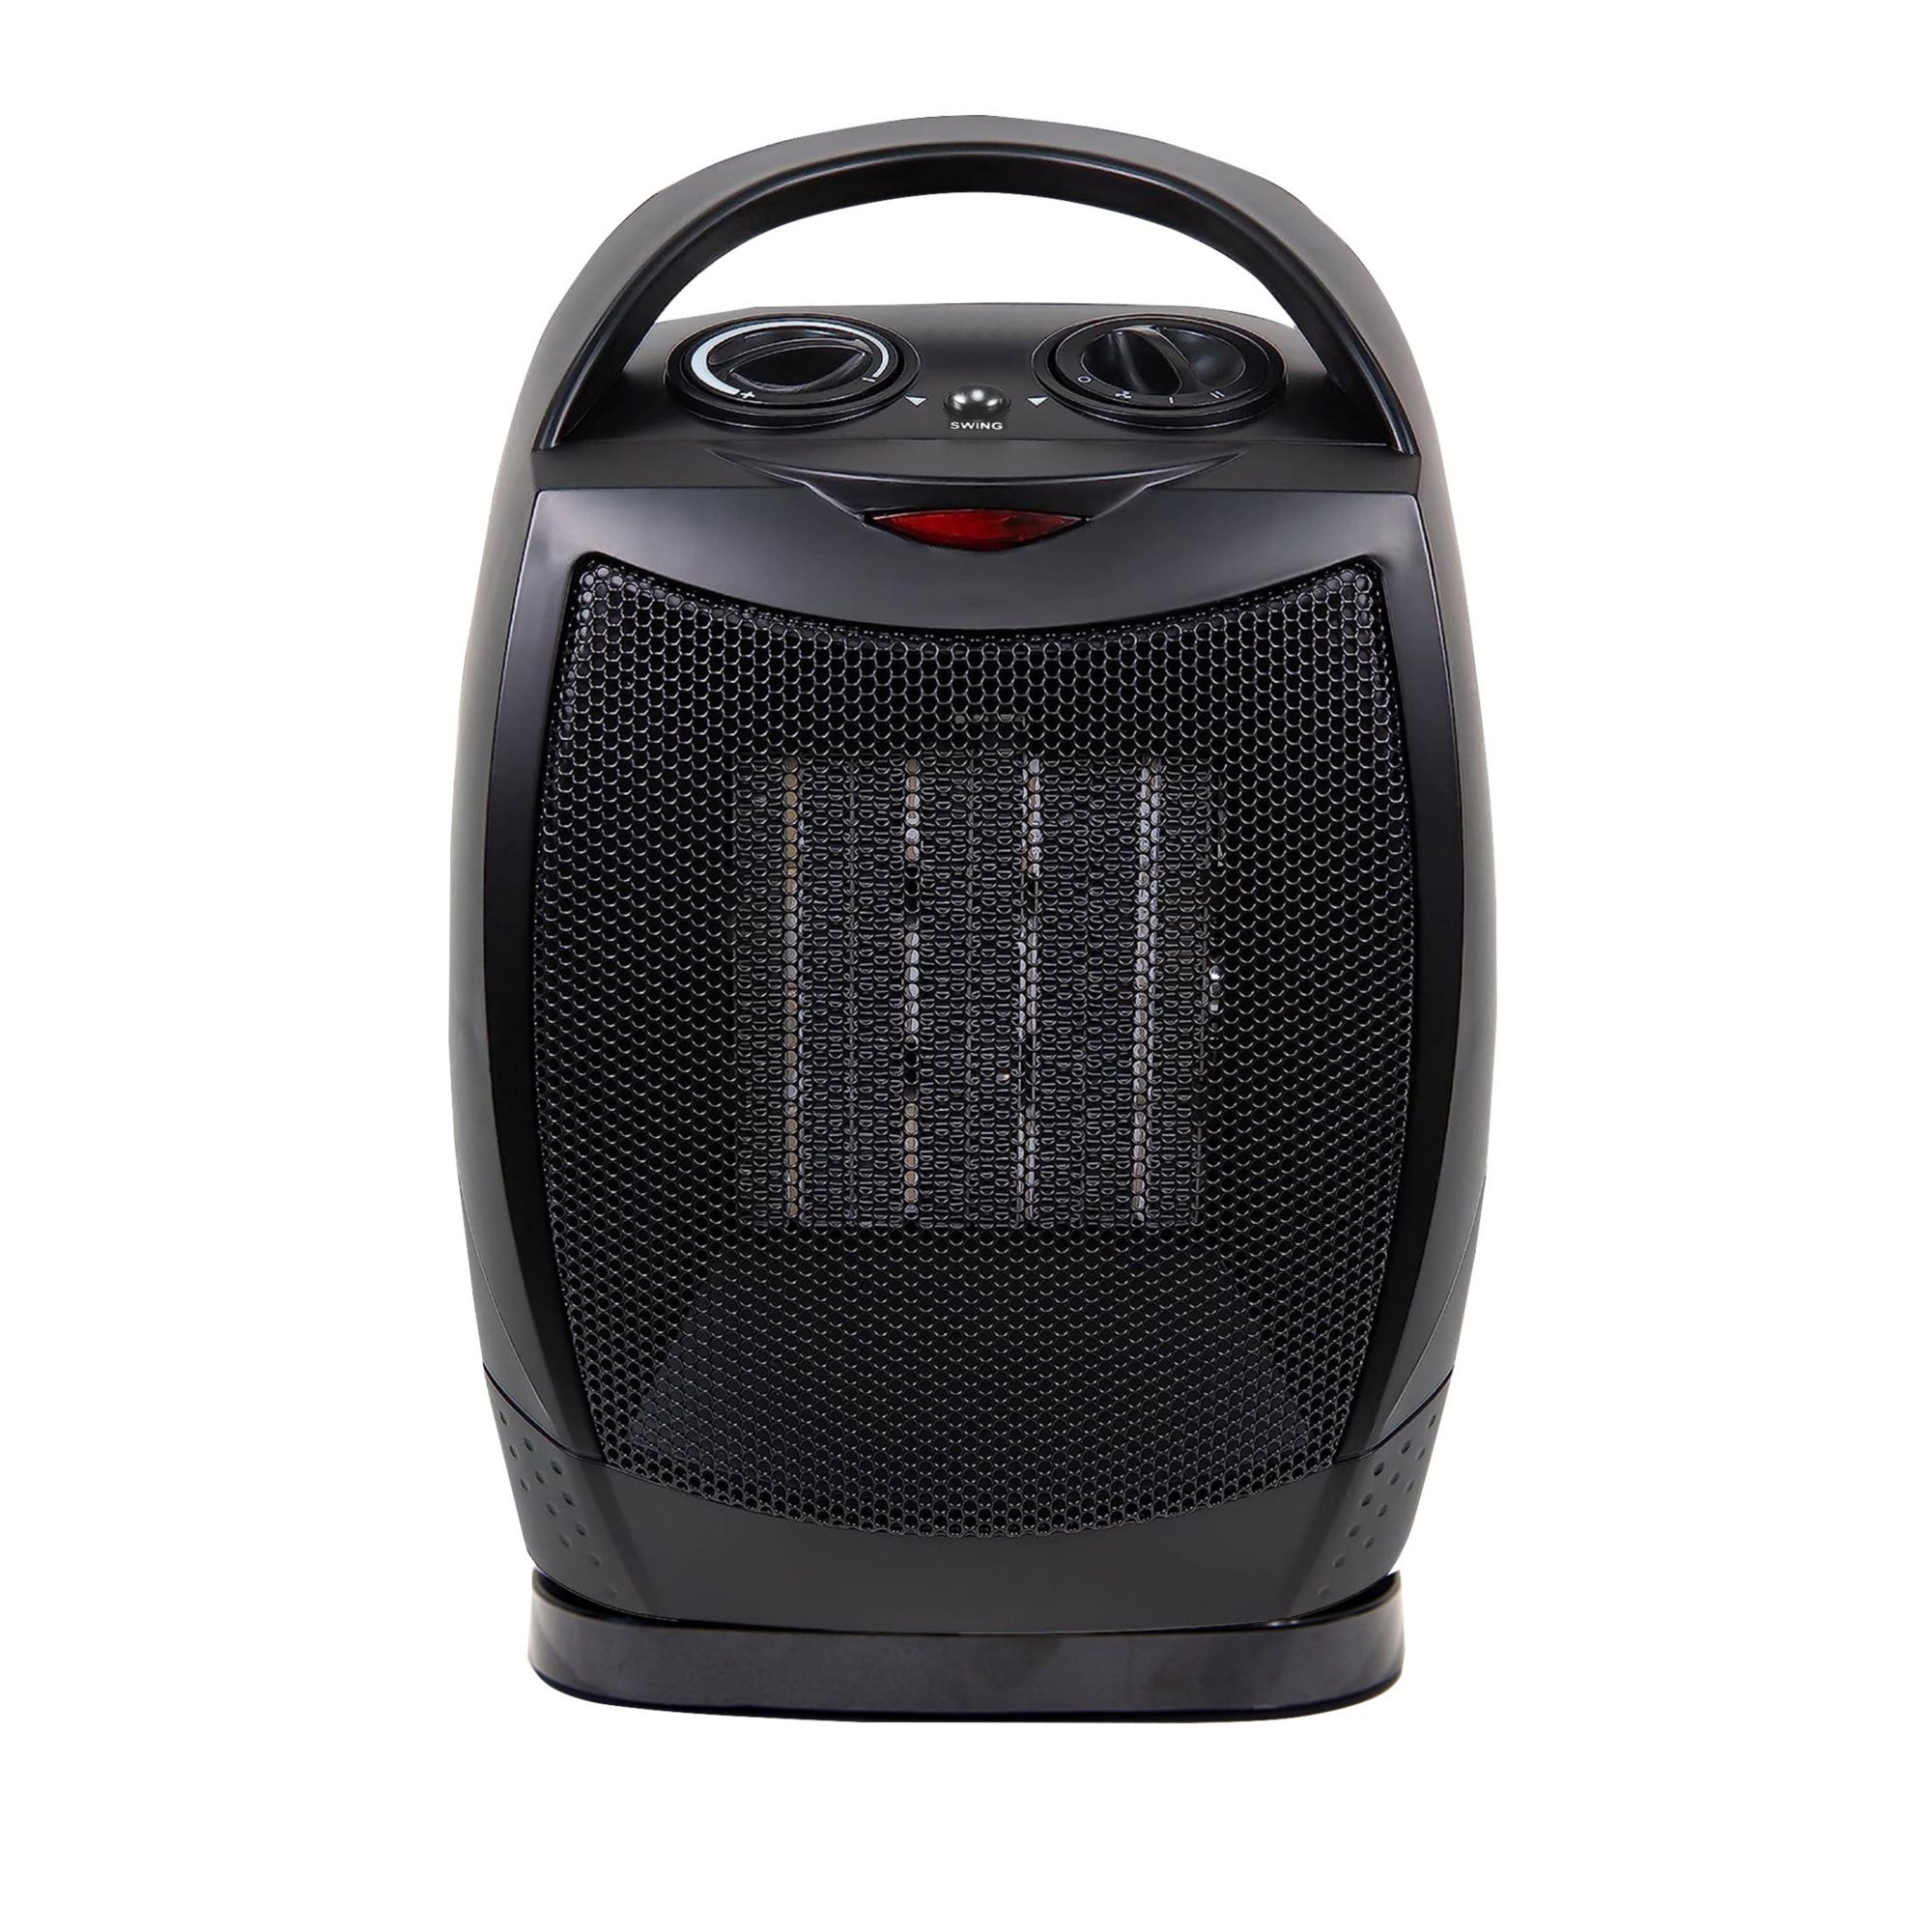 Ceramic Heater Portable Space Heater Black and Decker 1500 watt